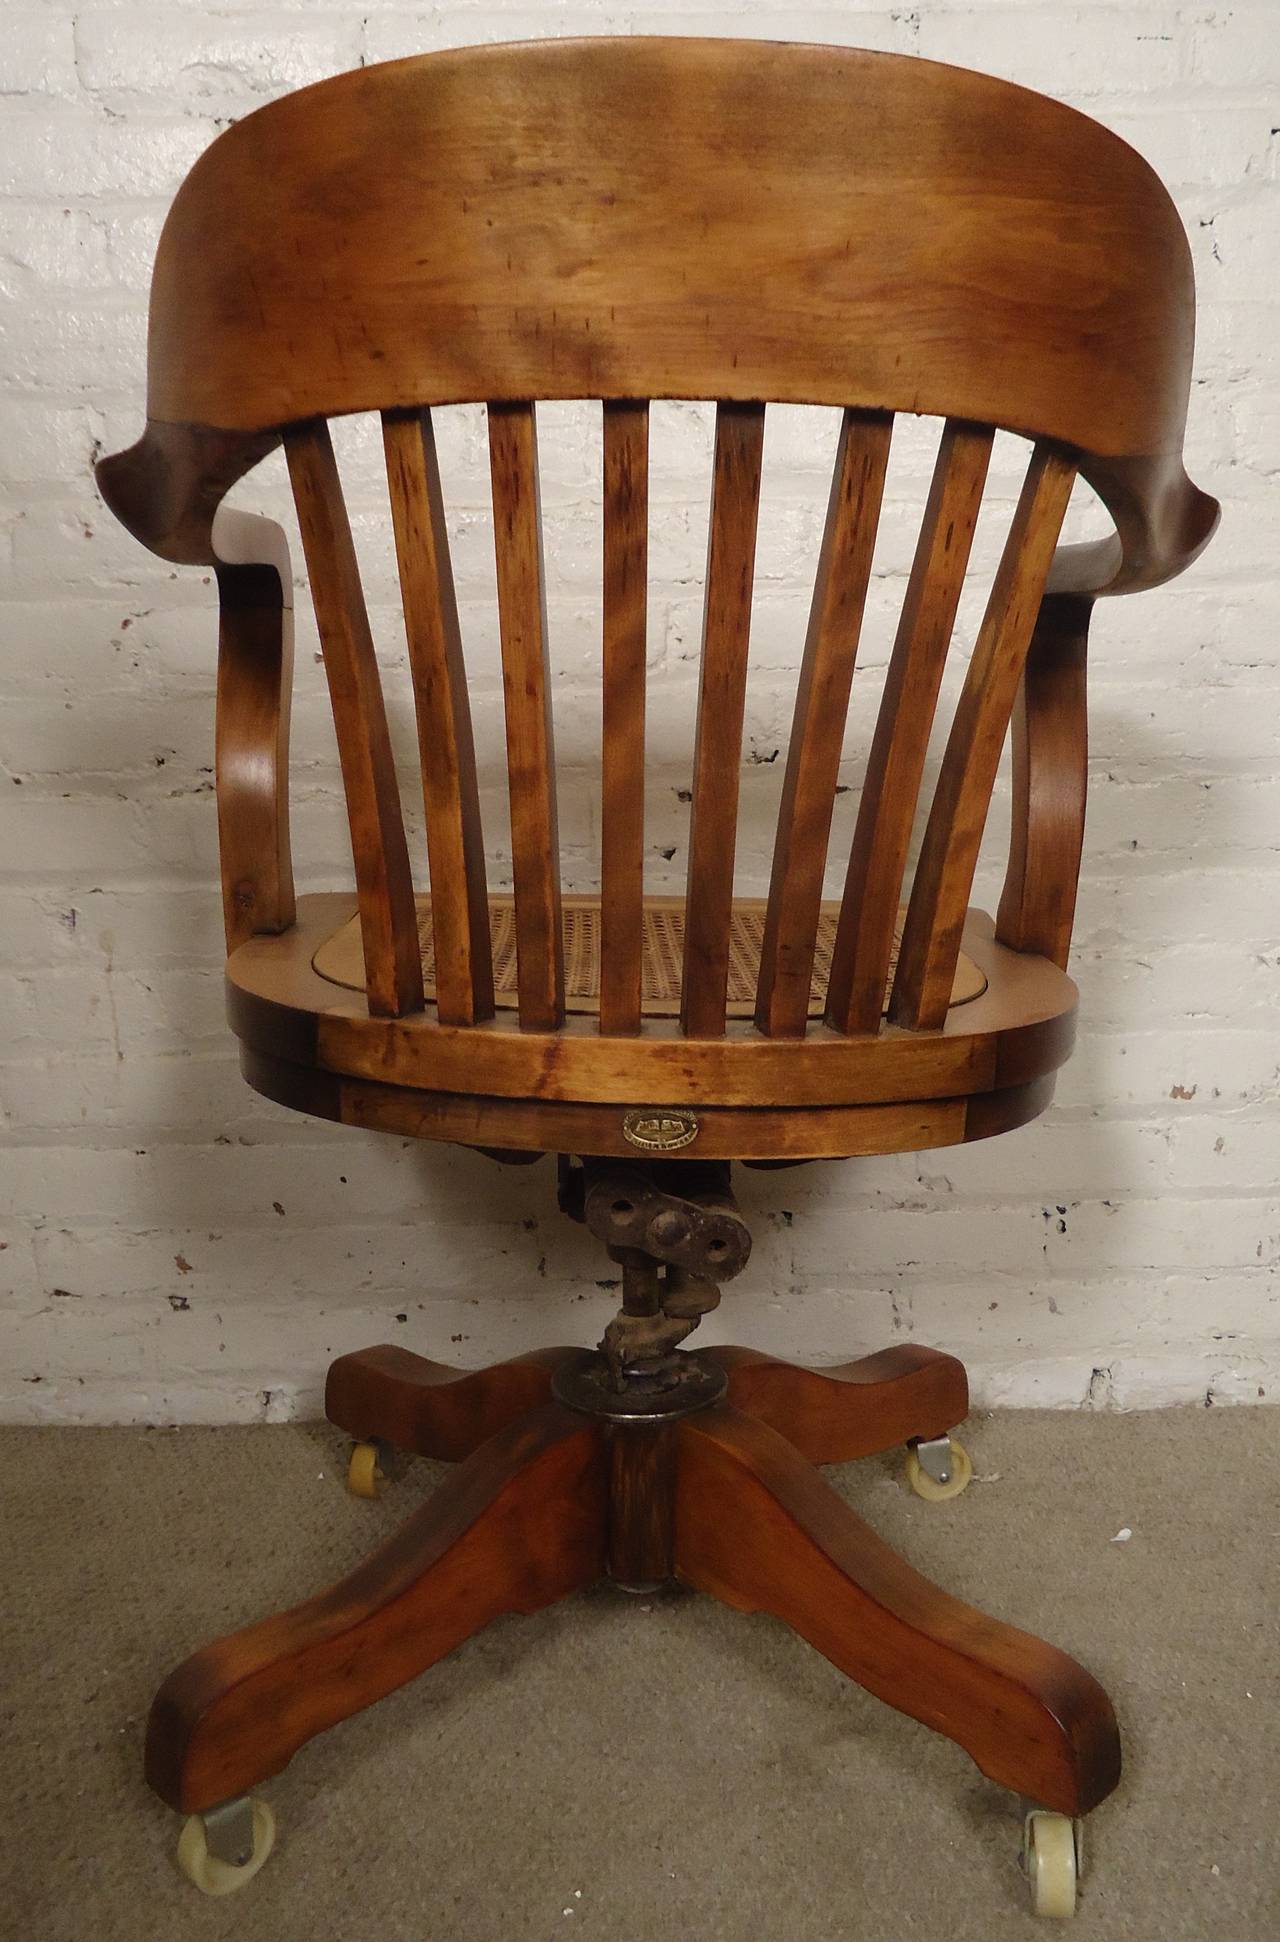 vintage swivel chairs